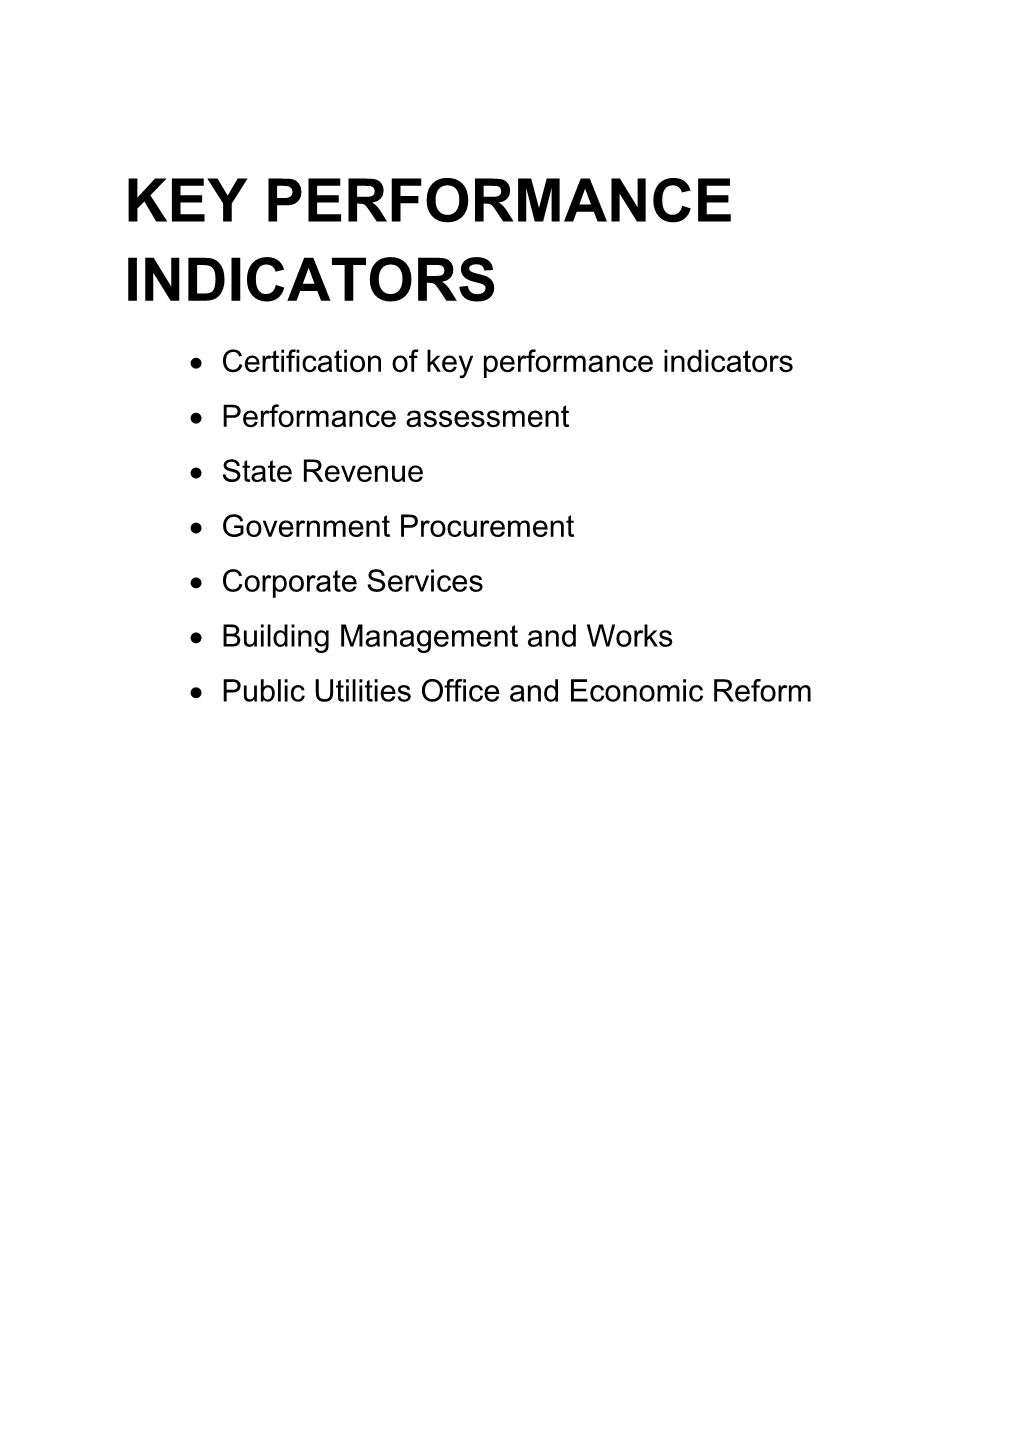 Department of Finance Annual Report 2014-15: Key Performance Indicators